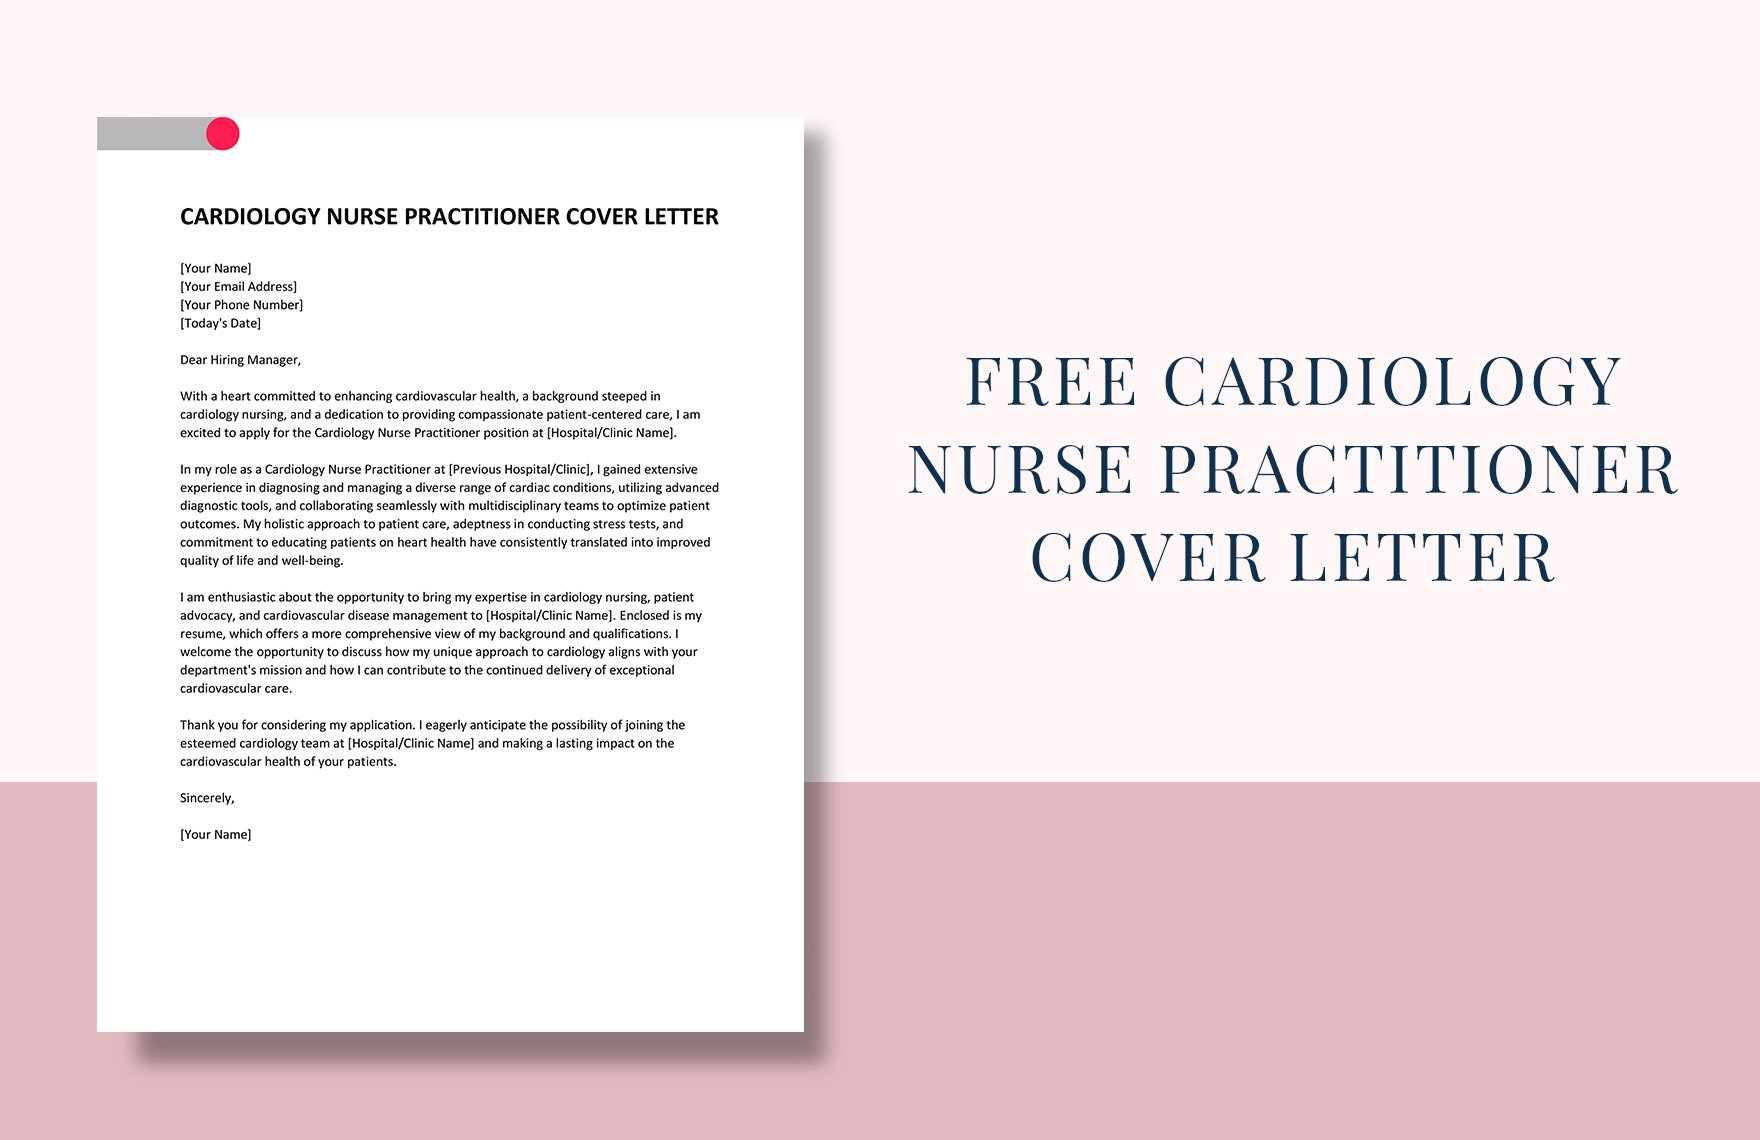 Cardiology Nurse Practitioner Cover Letter in Word, Google Docs